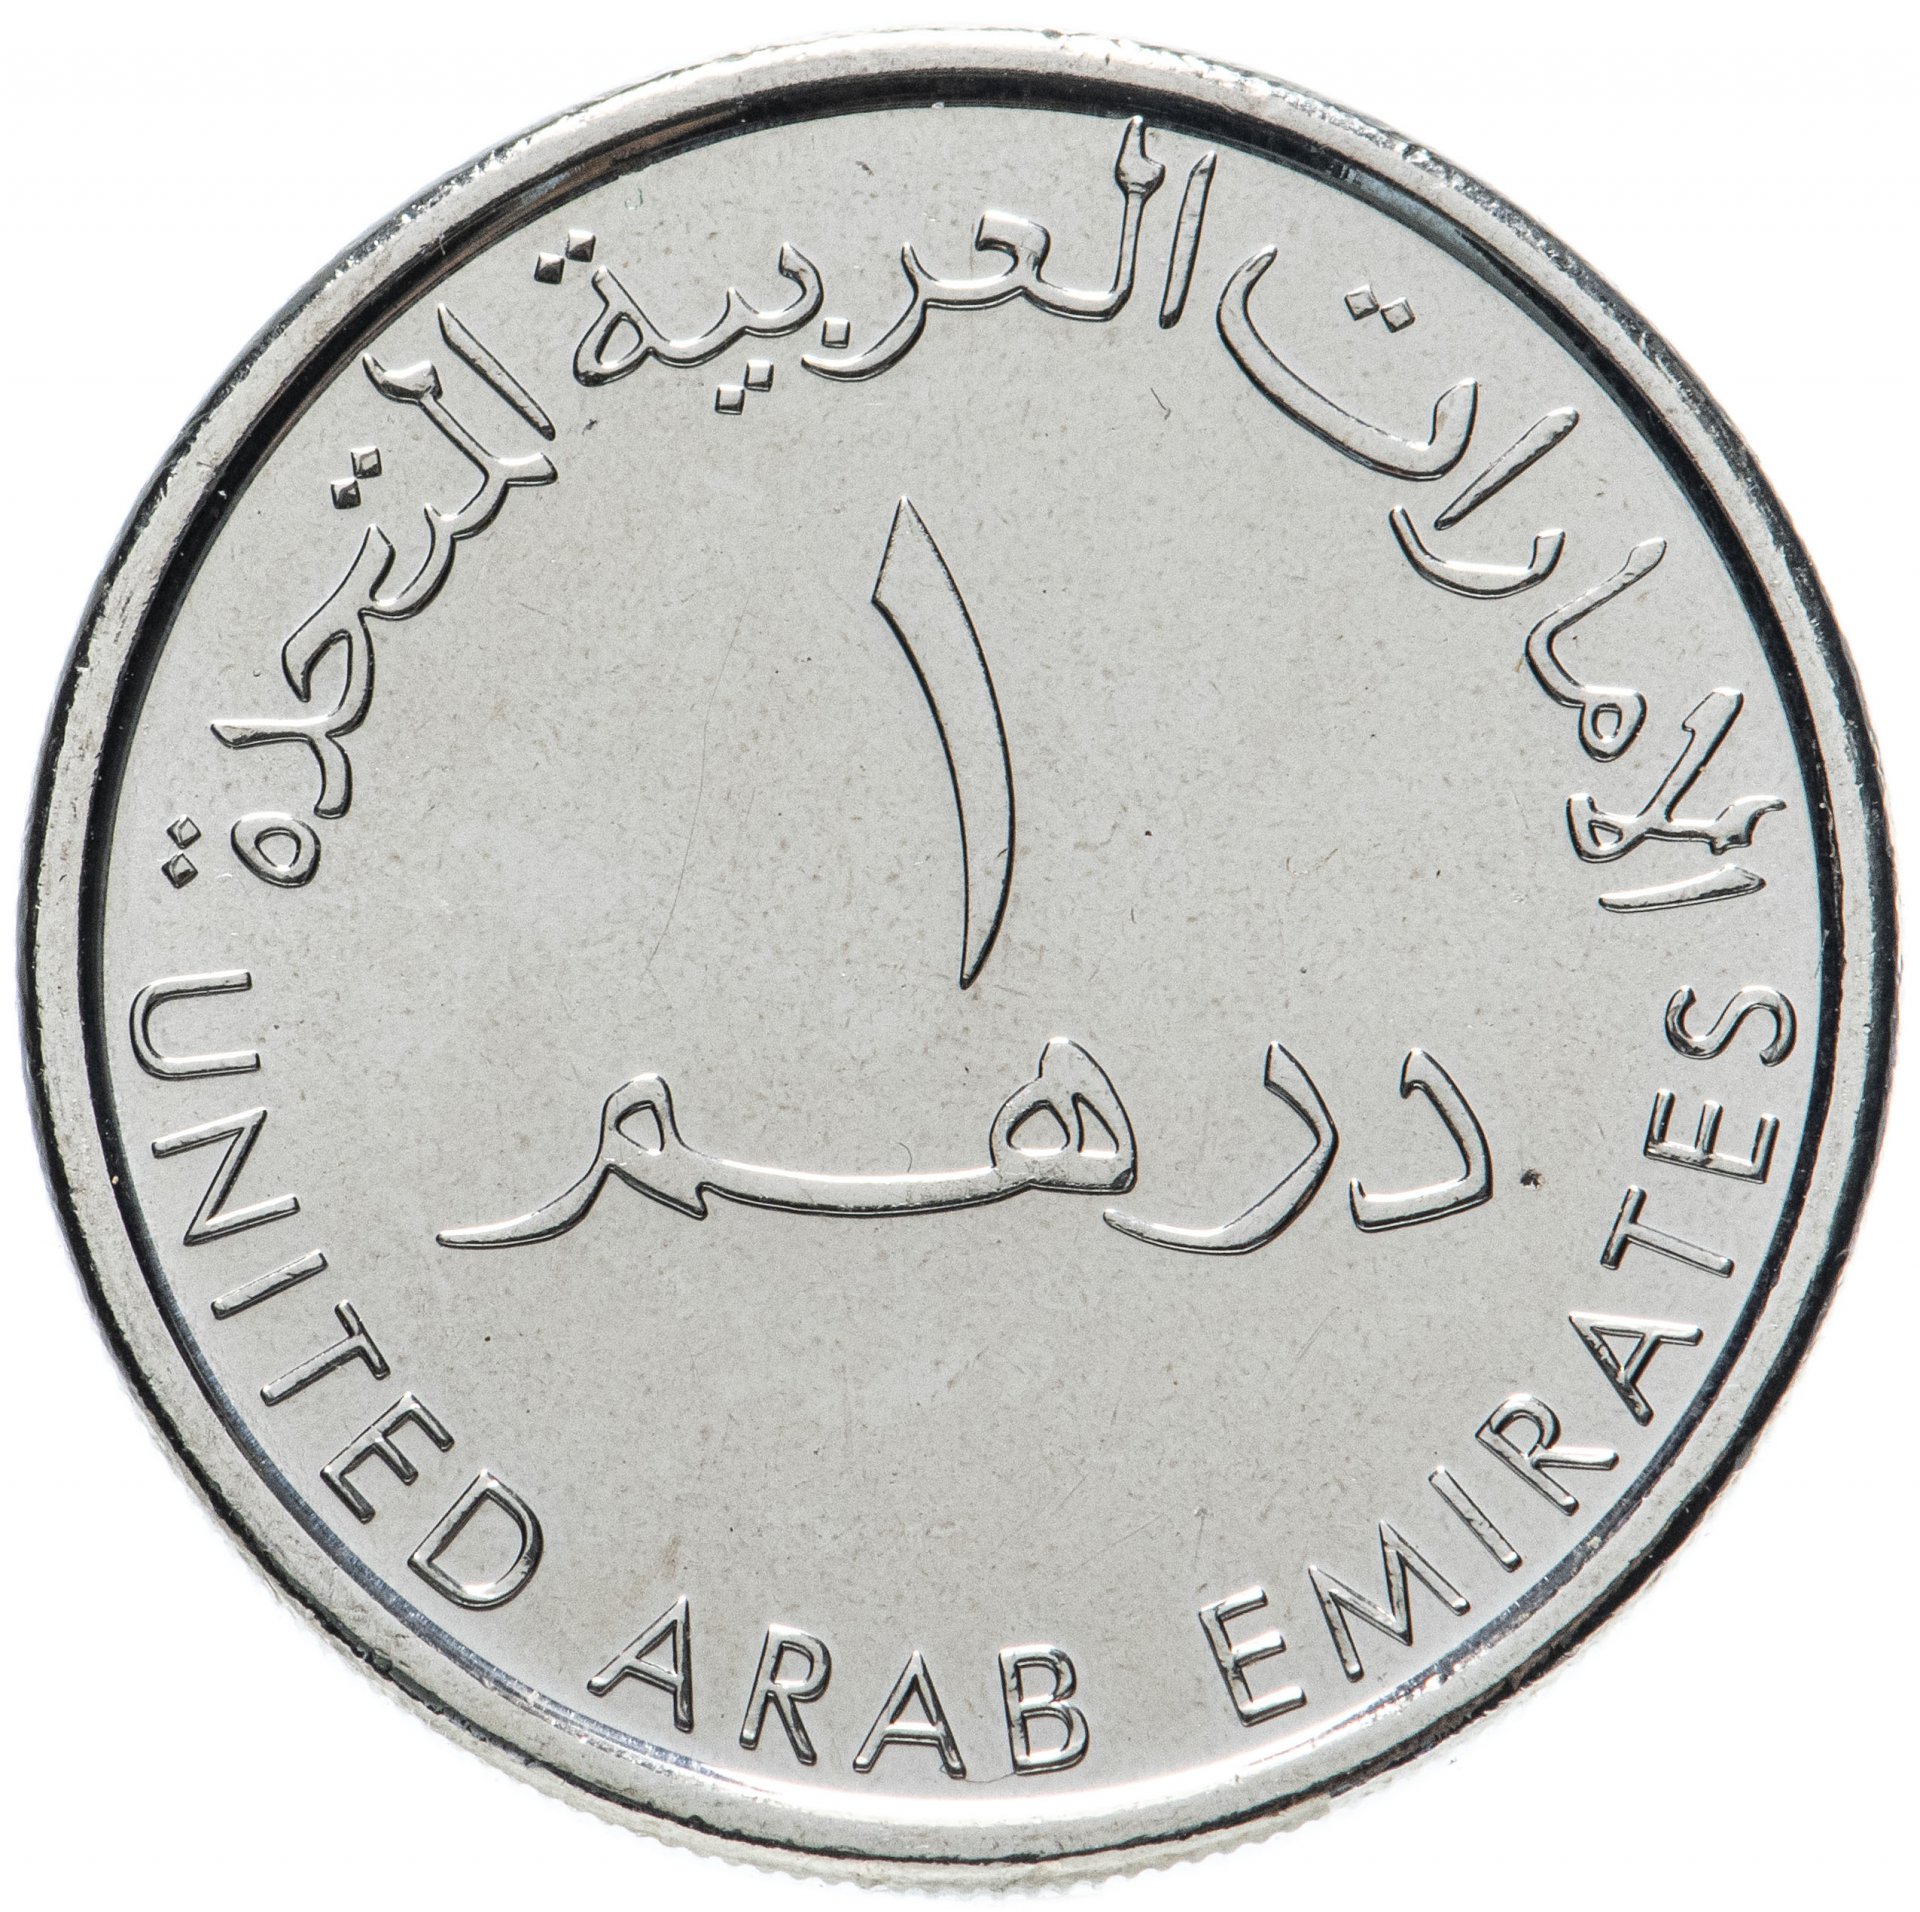 17200 дирхам. Монета 1 дирхам (ОАЭ) арабские эмираты.. Монета арабская United arab Emirates. Монеты ОАЭ 1 дирхам. Монеты Дубая 1 дирхам.